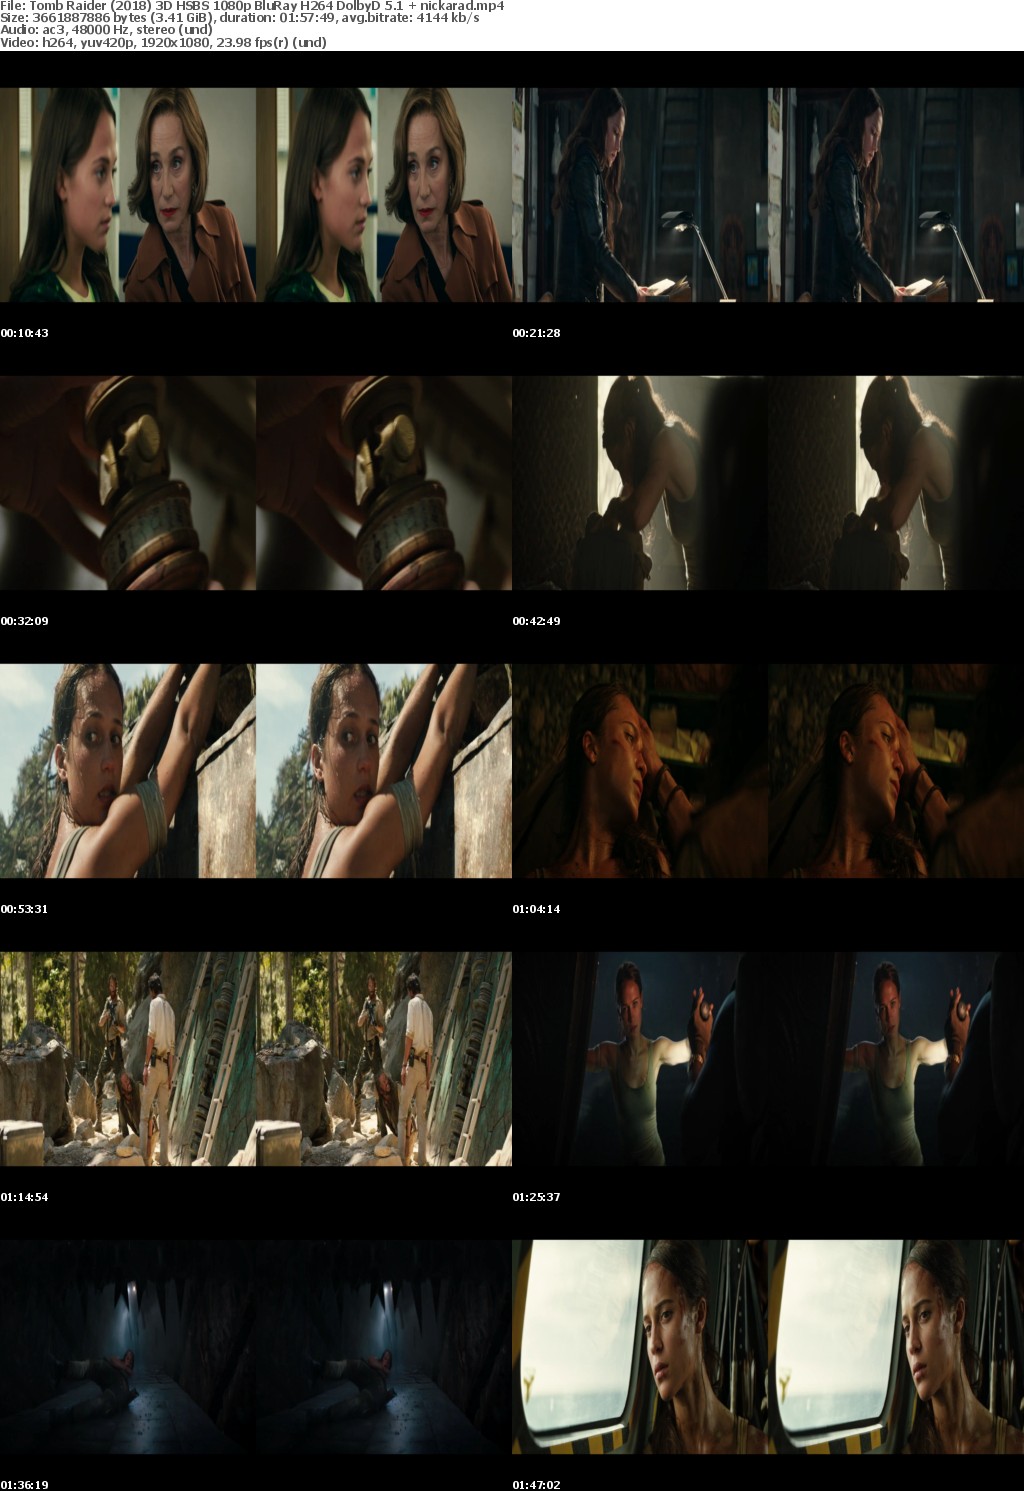 Tomb Raider (2018) 3D HSBS 1080p BluRay H264 DolbyD 5 1 nickarad